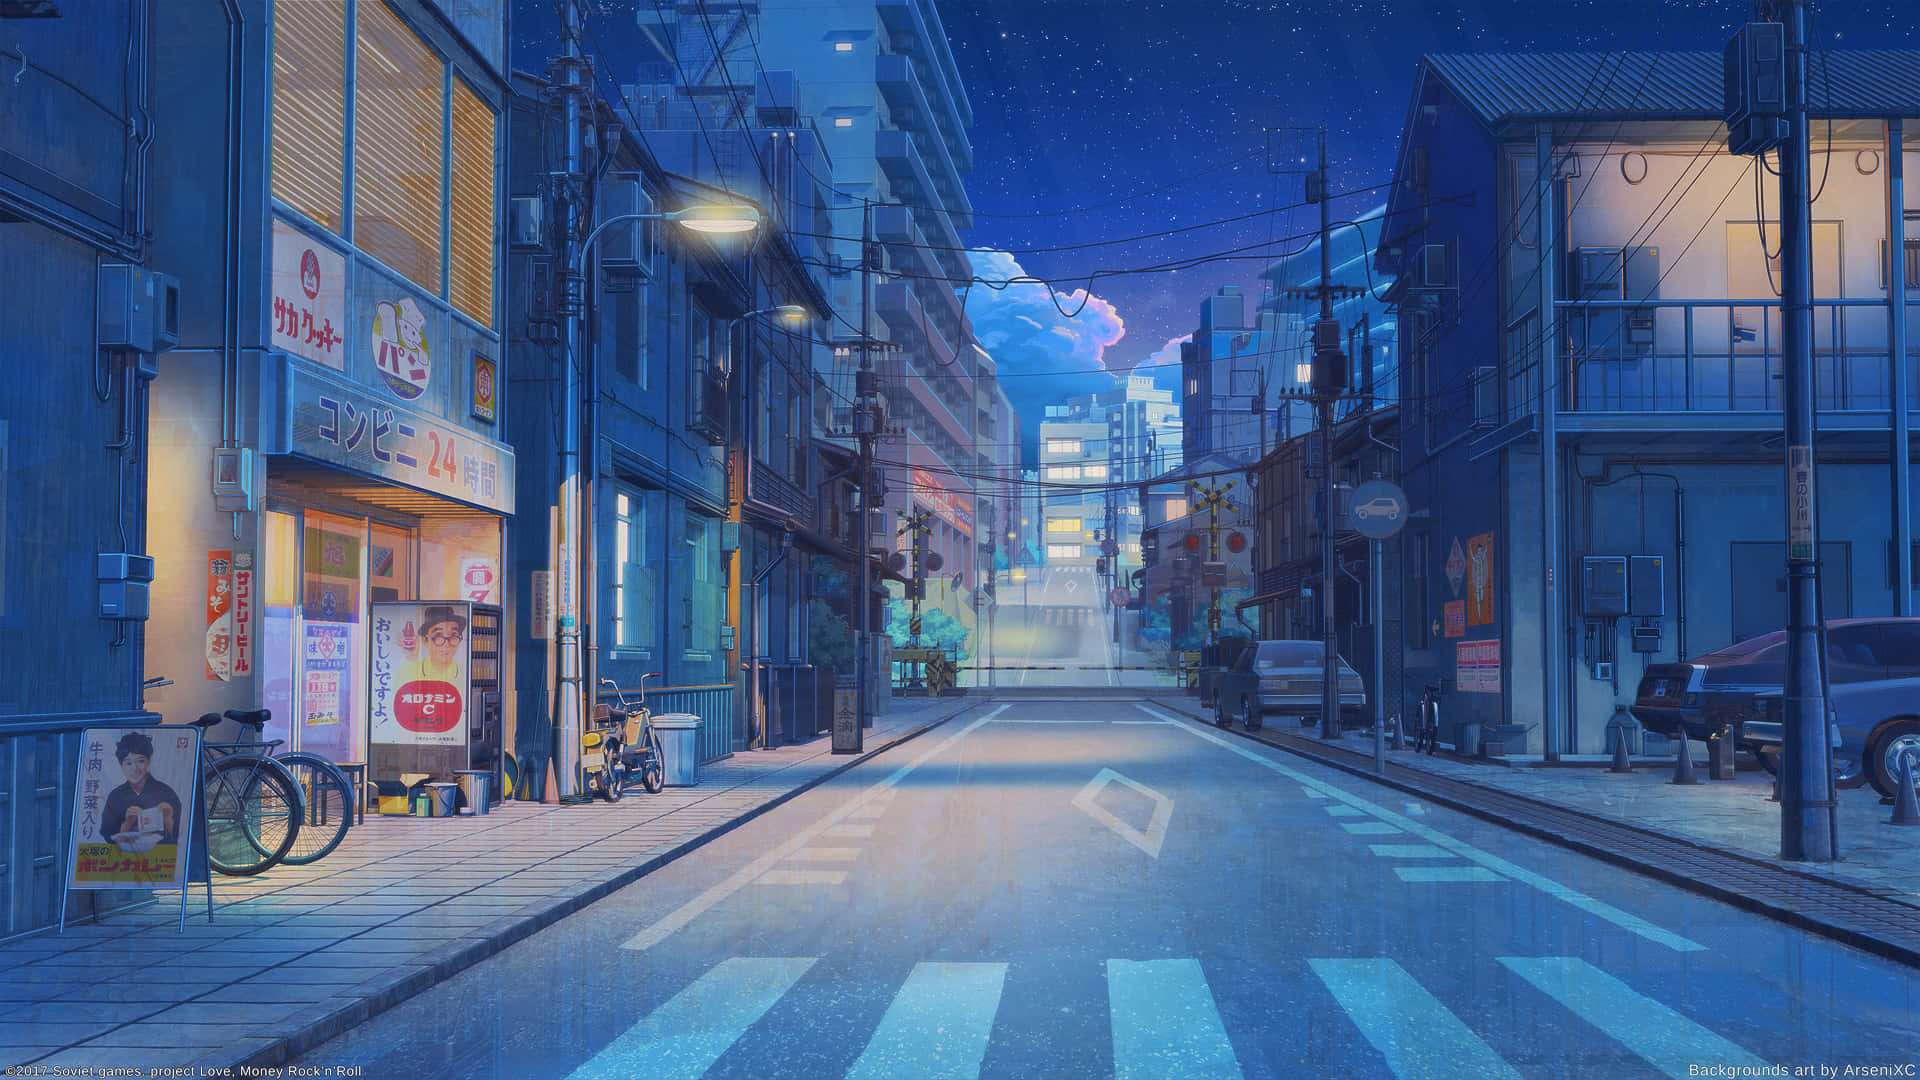 Tokyobaggrund, Anime Tegning, Stille Gade Om Natten.